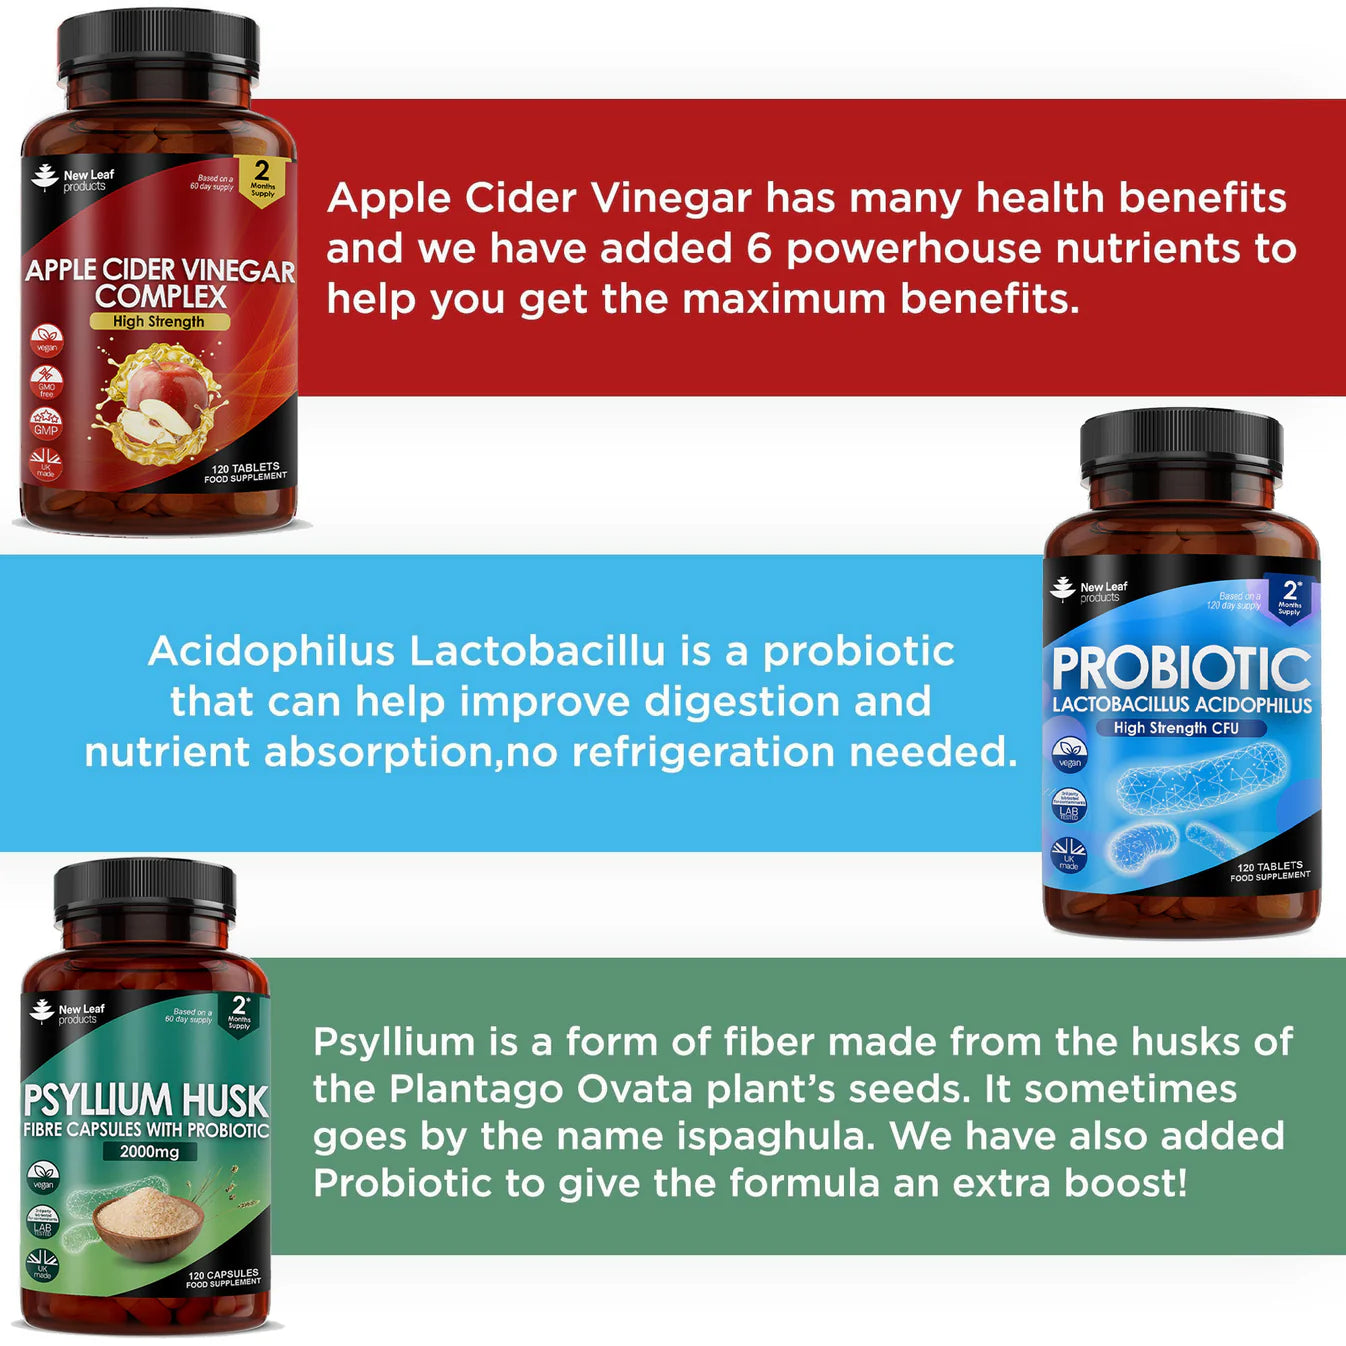 New Leaf - Gut Health Supplements Bundle - Psyllium Husk Fibre, Probiotic, Apple Cider Complex